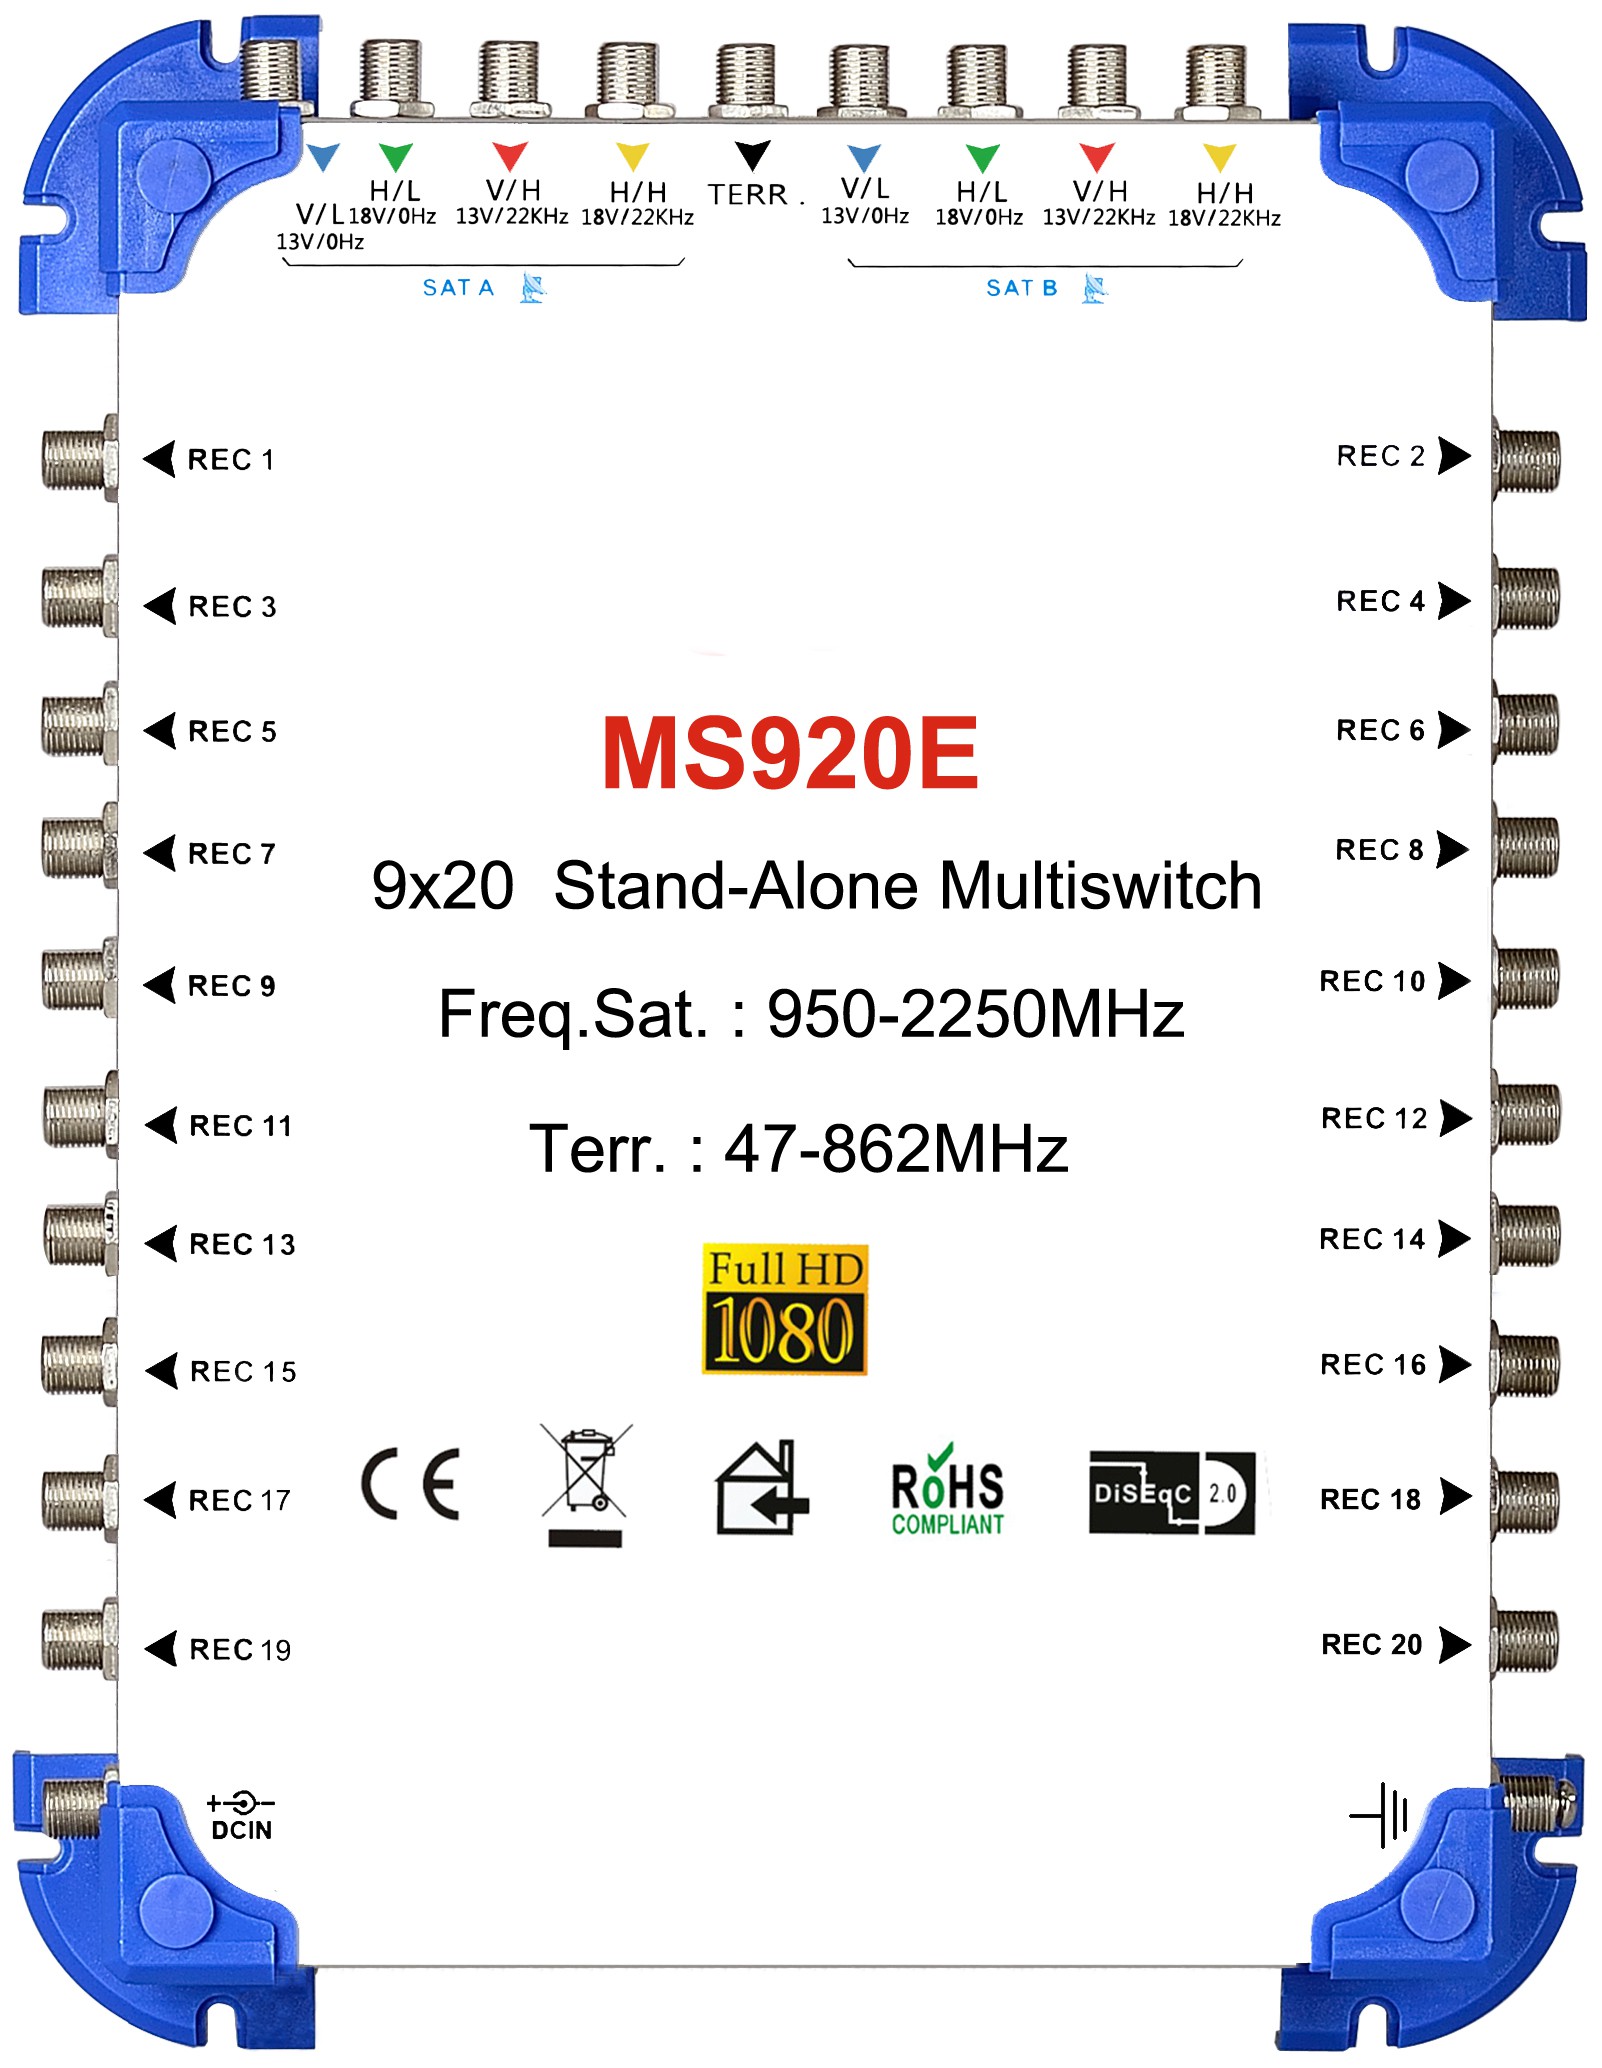 9x20  satellite multi-switch, Stand-Alone multiswitch